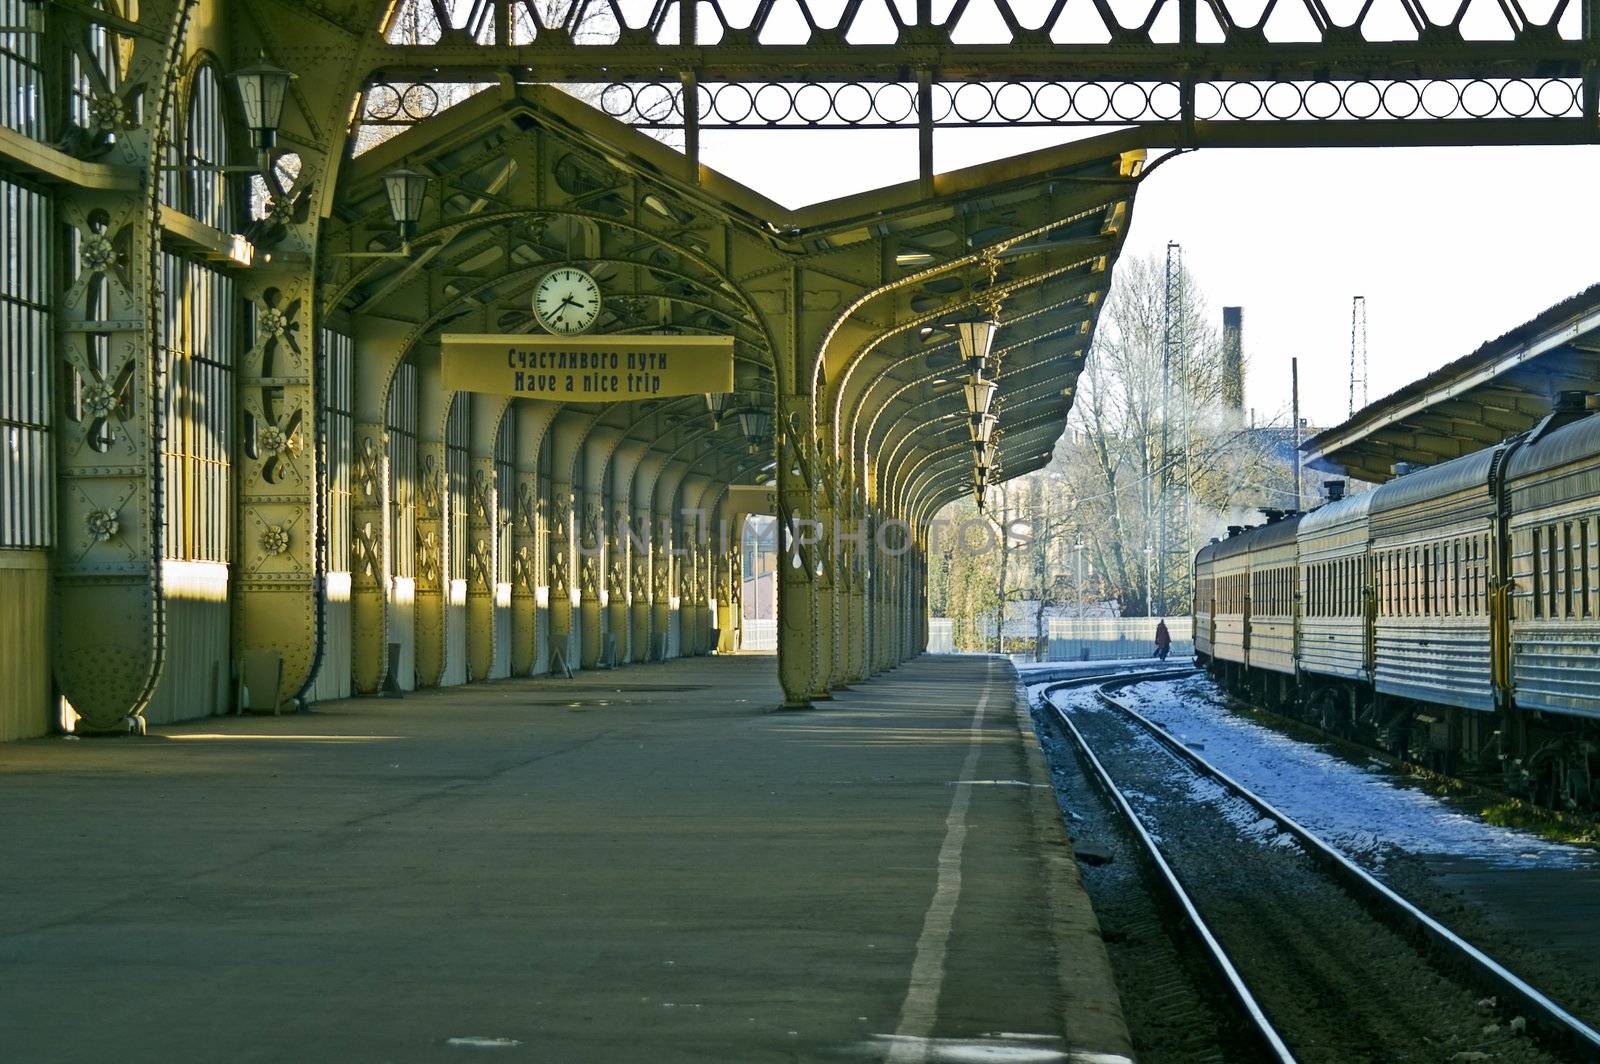 Railroad station platform by simfan